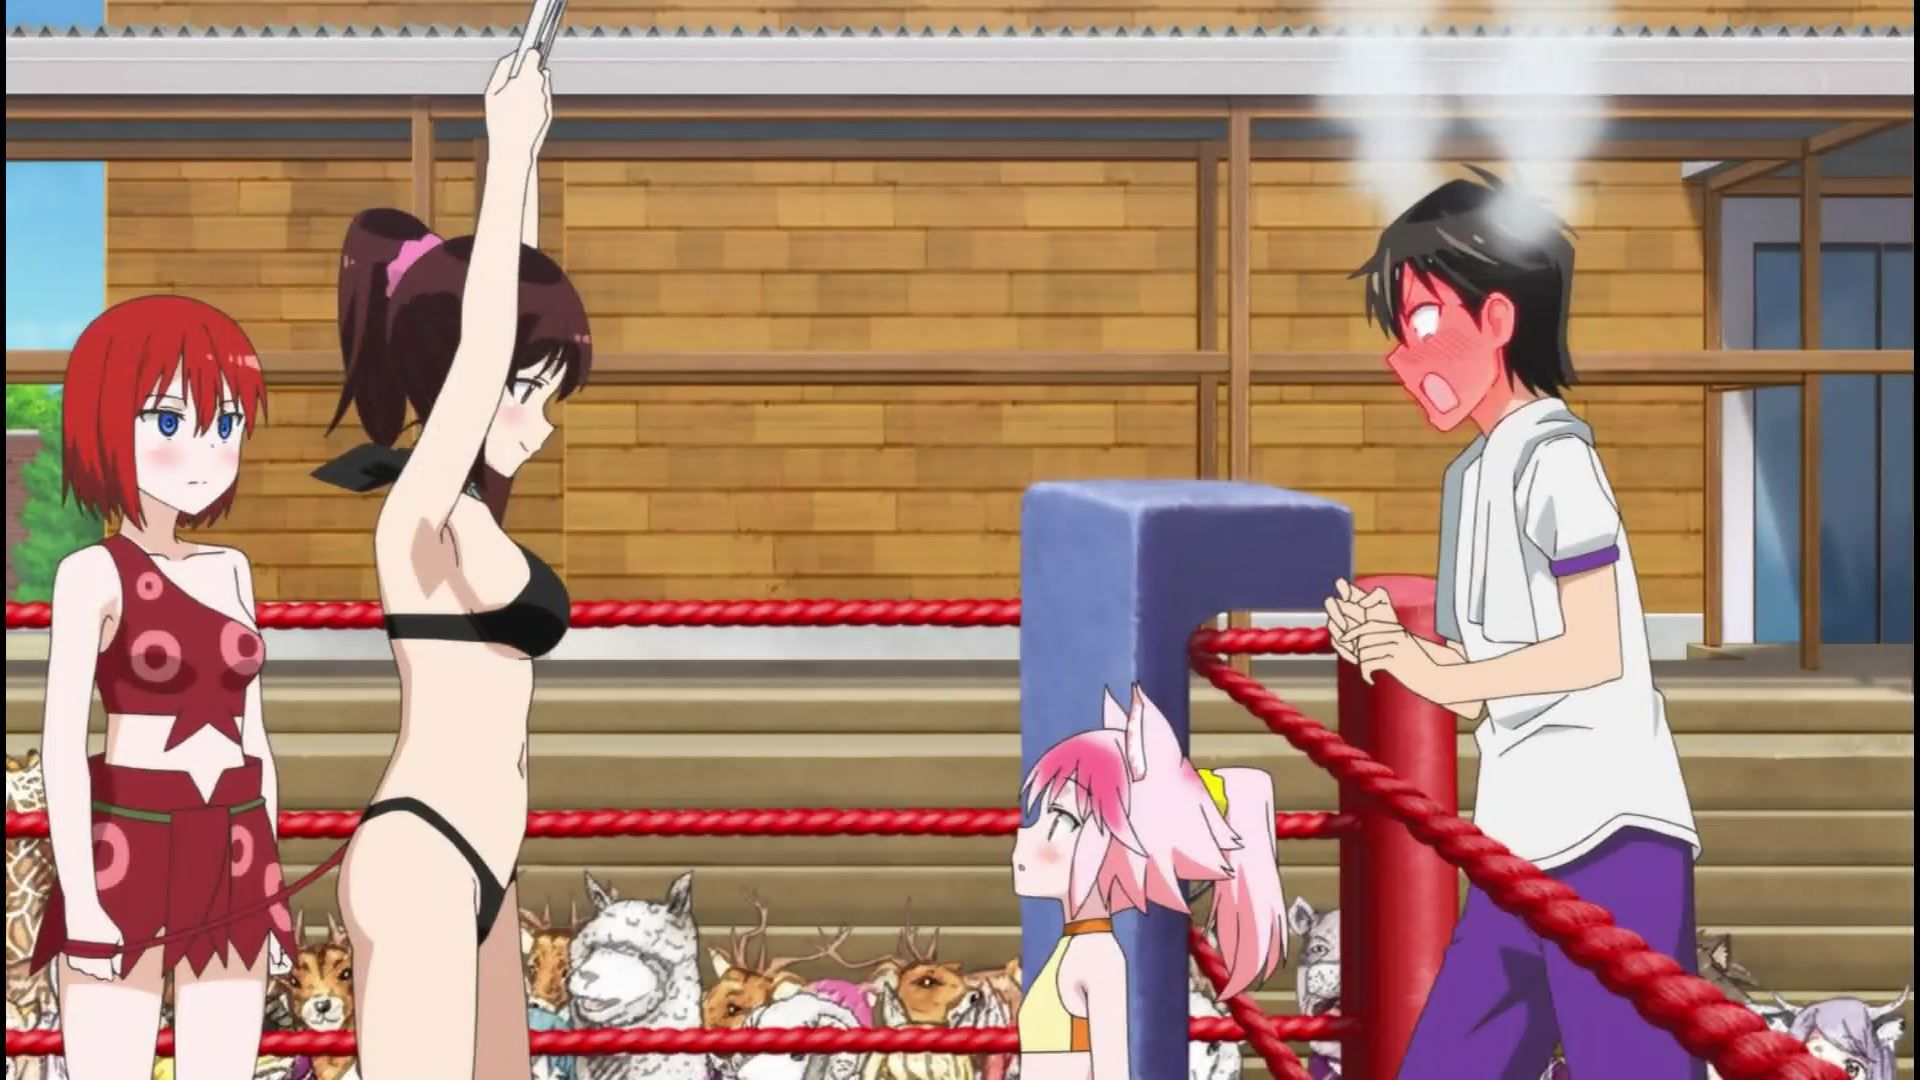 Anime [Shimarenuse] Seaton Gakuen] scene that girls become insanely erotic costumes in episode 12 9